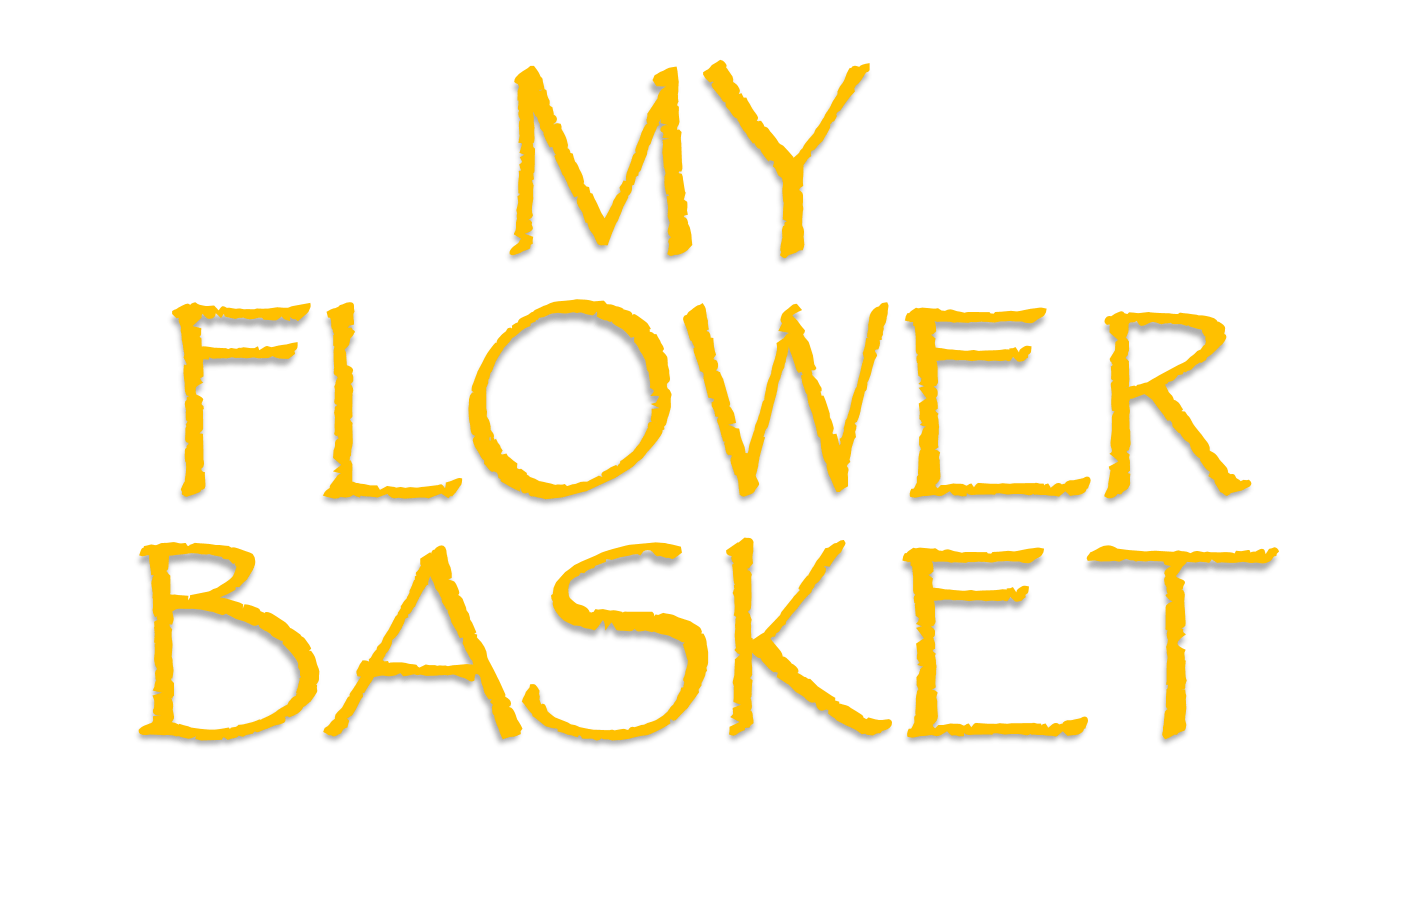 My Flower Basket